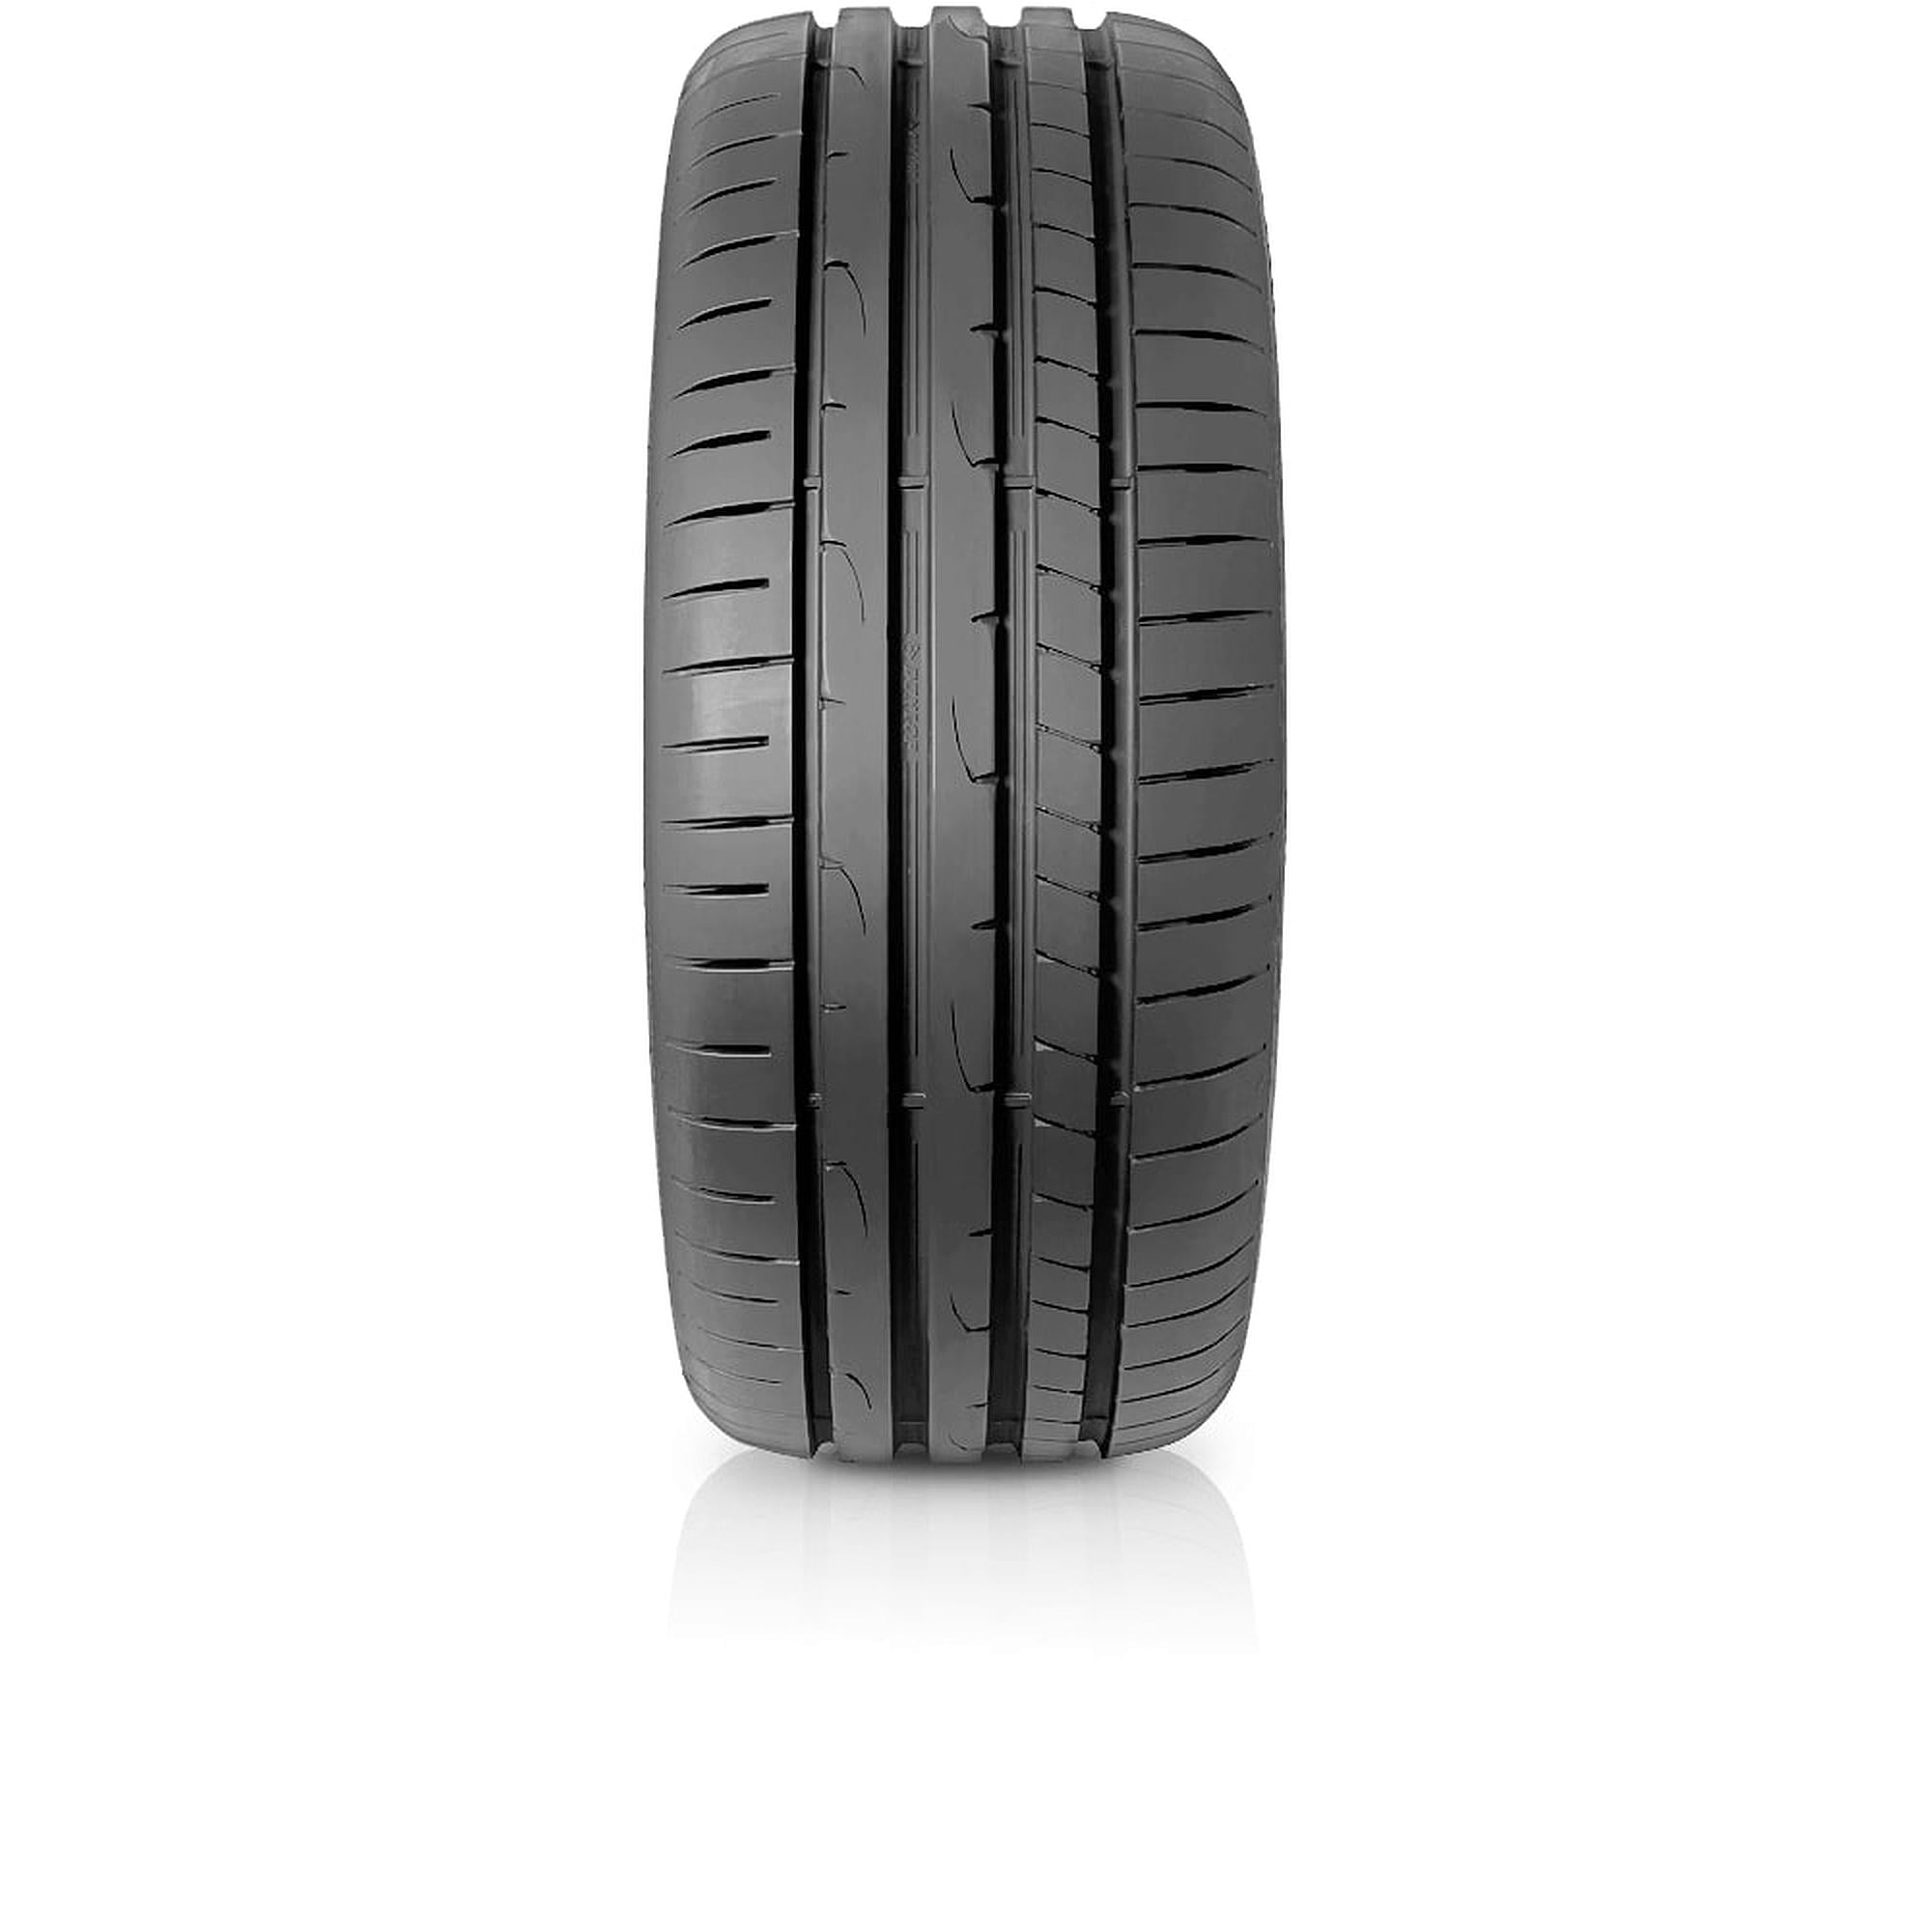 Dunlop Sport Maxx Rt2 255/35ZR18 94Y Performance Tire Fits: 2011 BMW 328i  Base, 2016-19 Cadillac ATS V